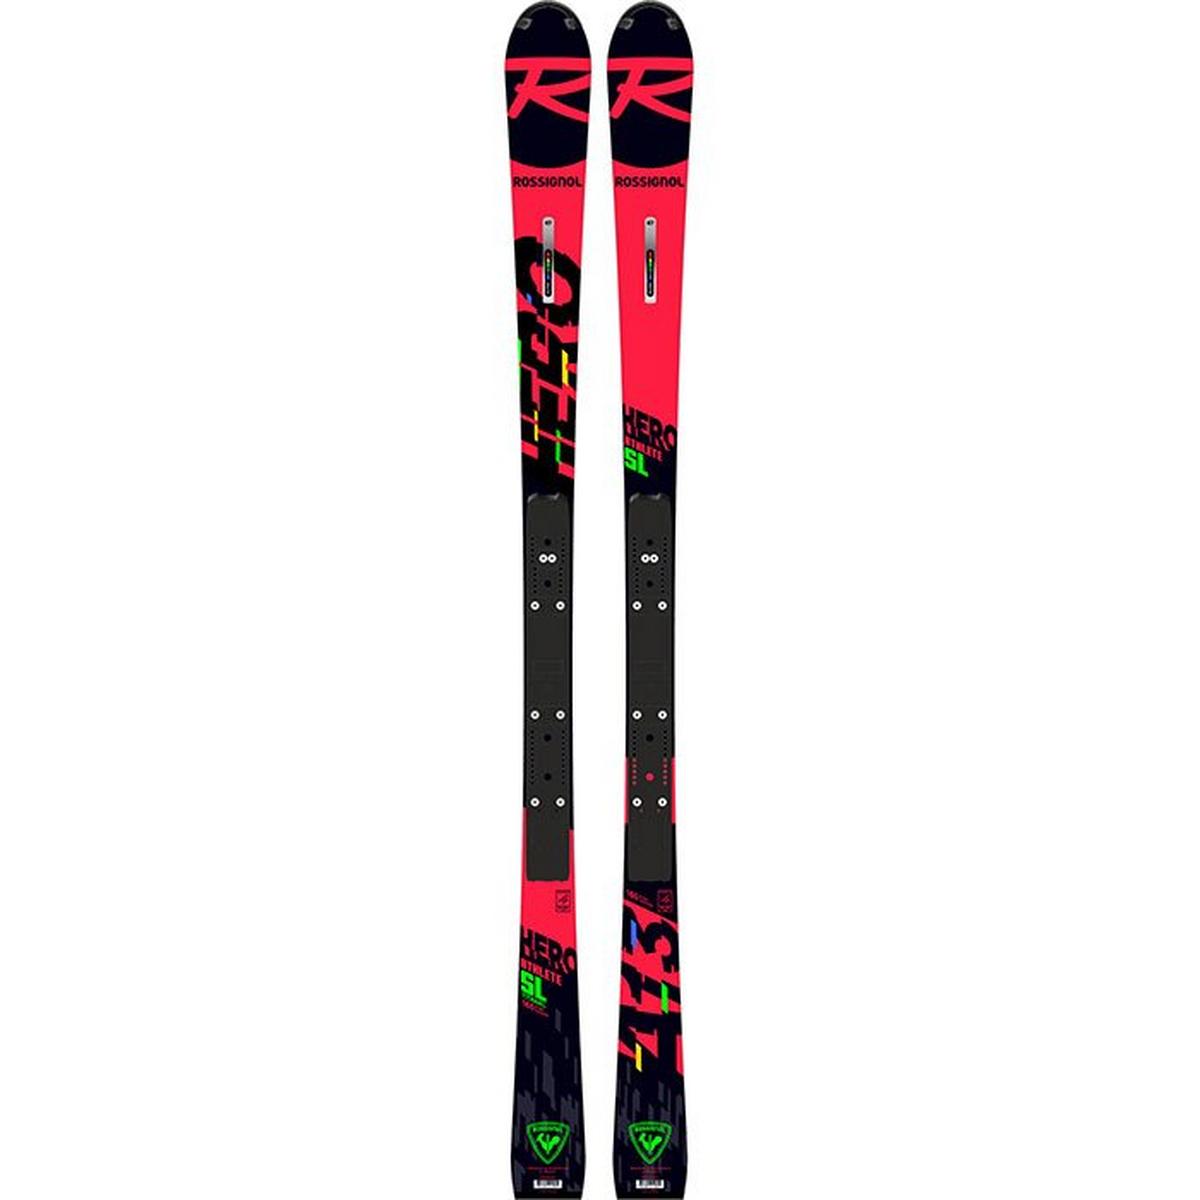 Skis Hero Athlete FIS SL [2021]